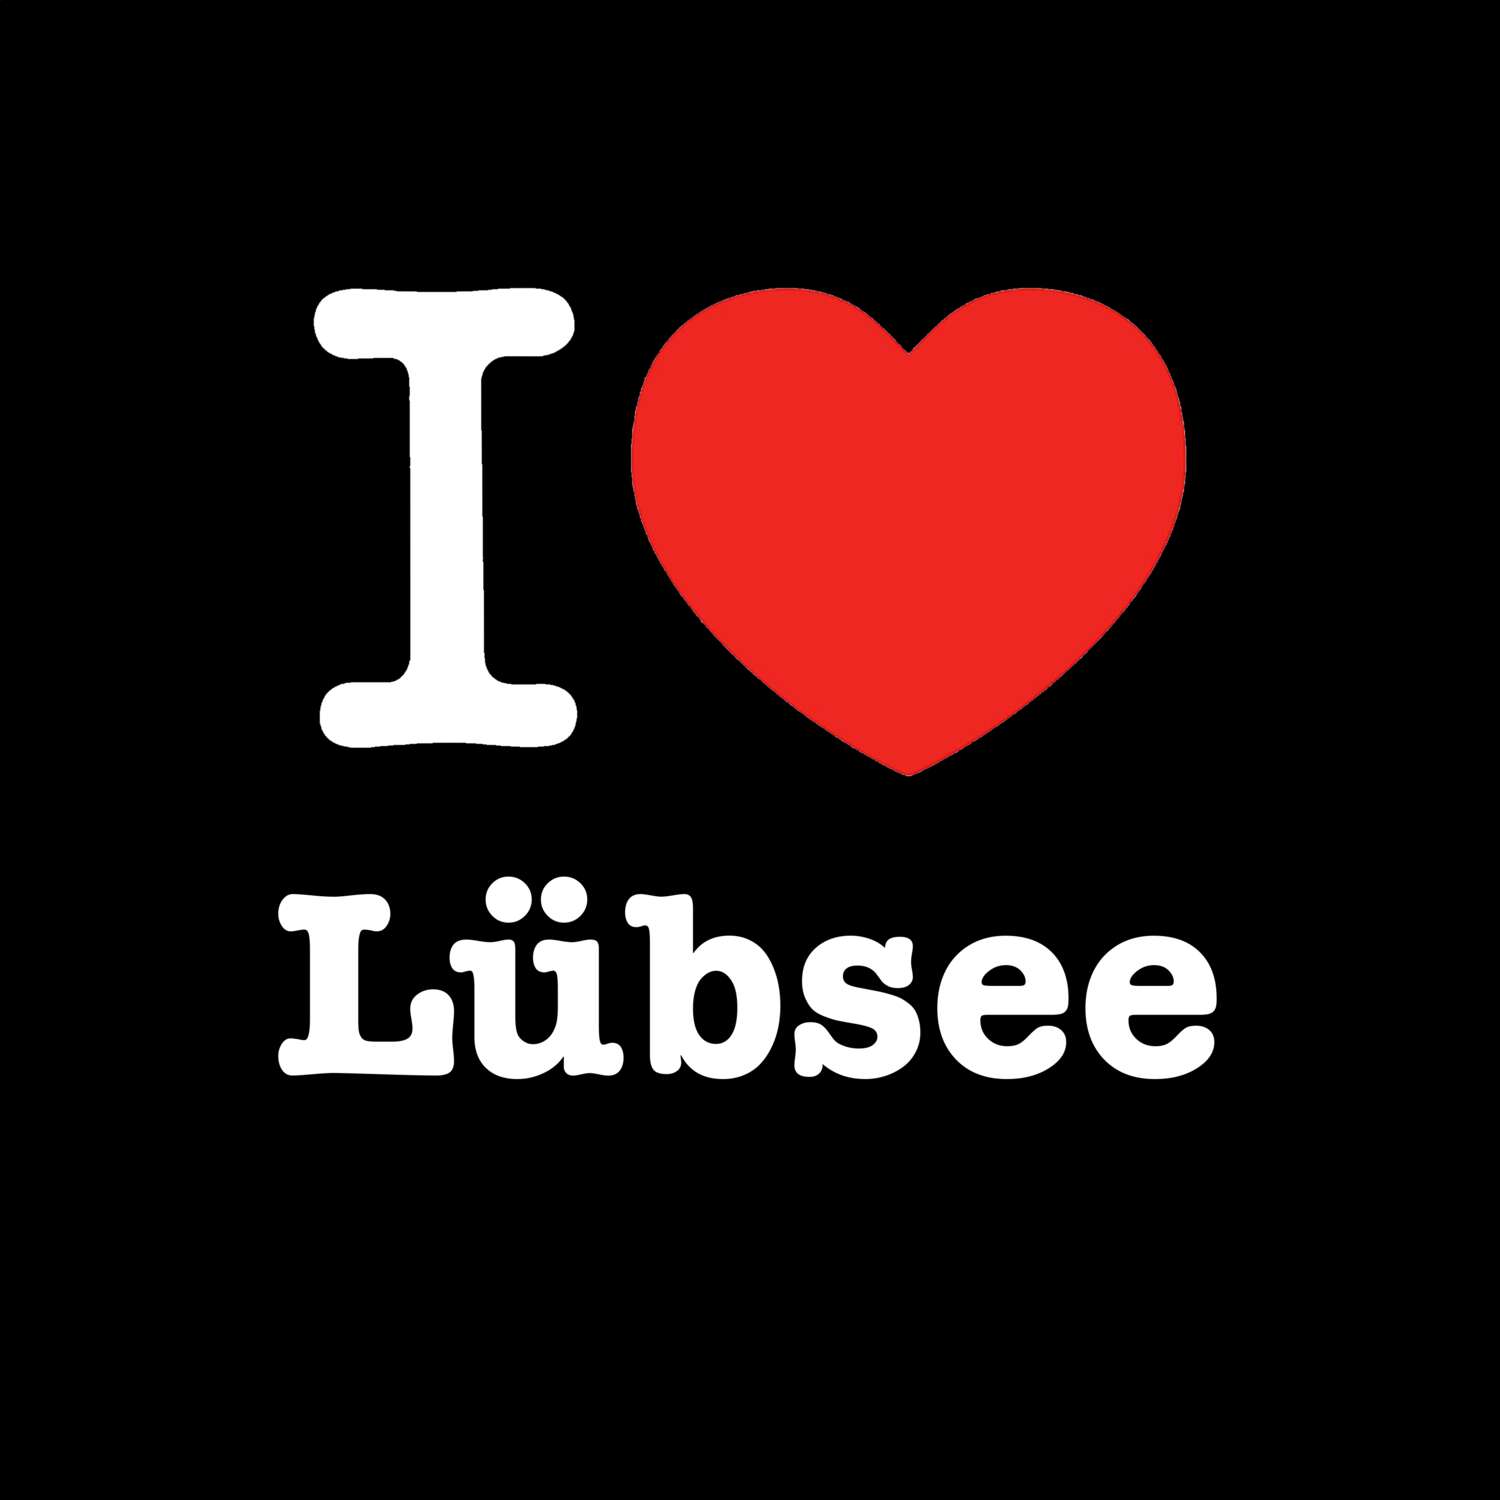 Lübsee T-Shirt »I love«